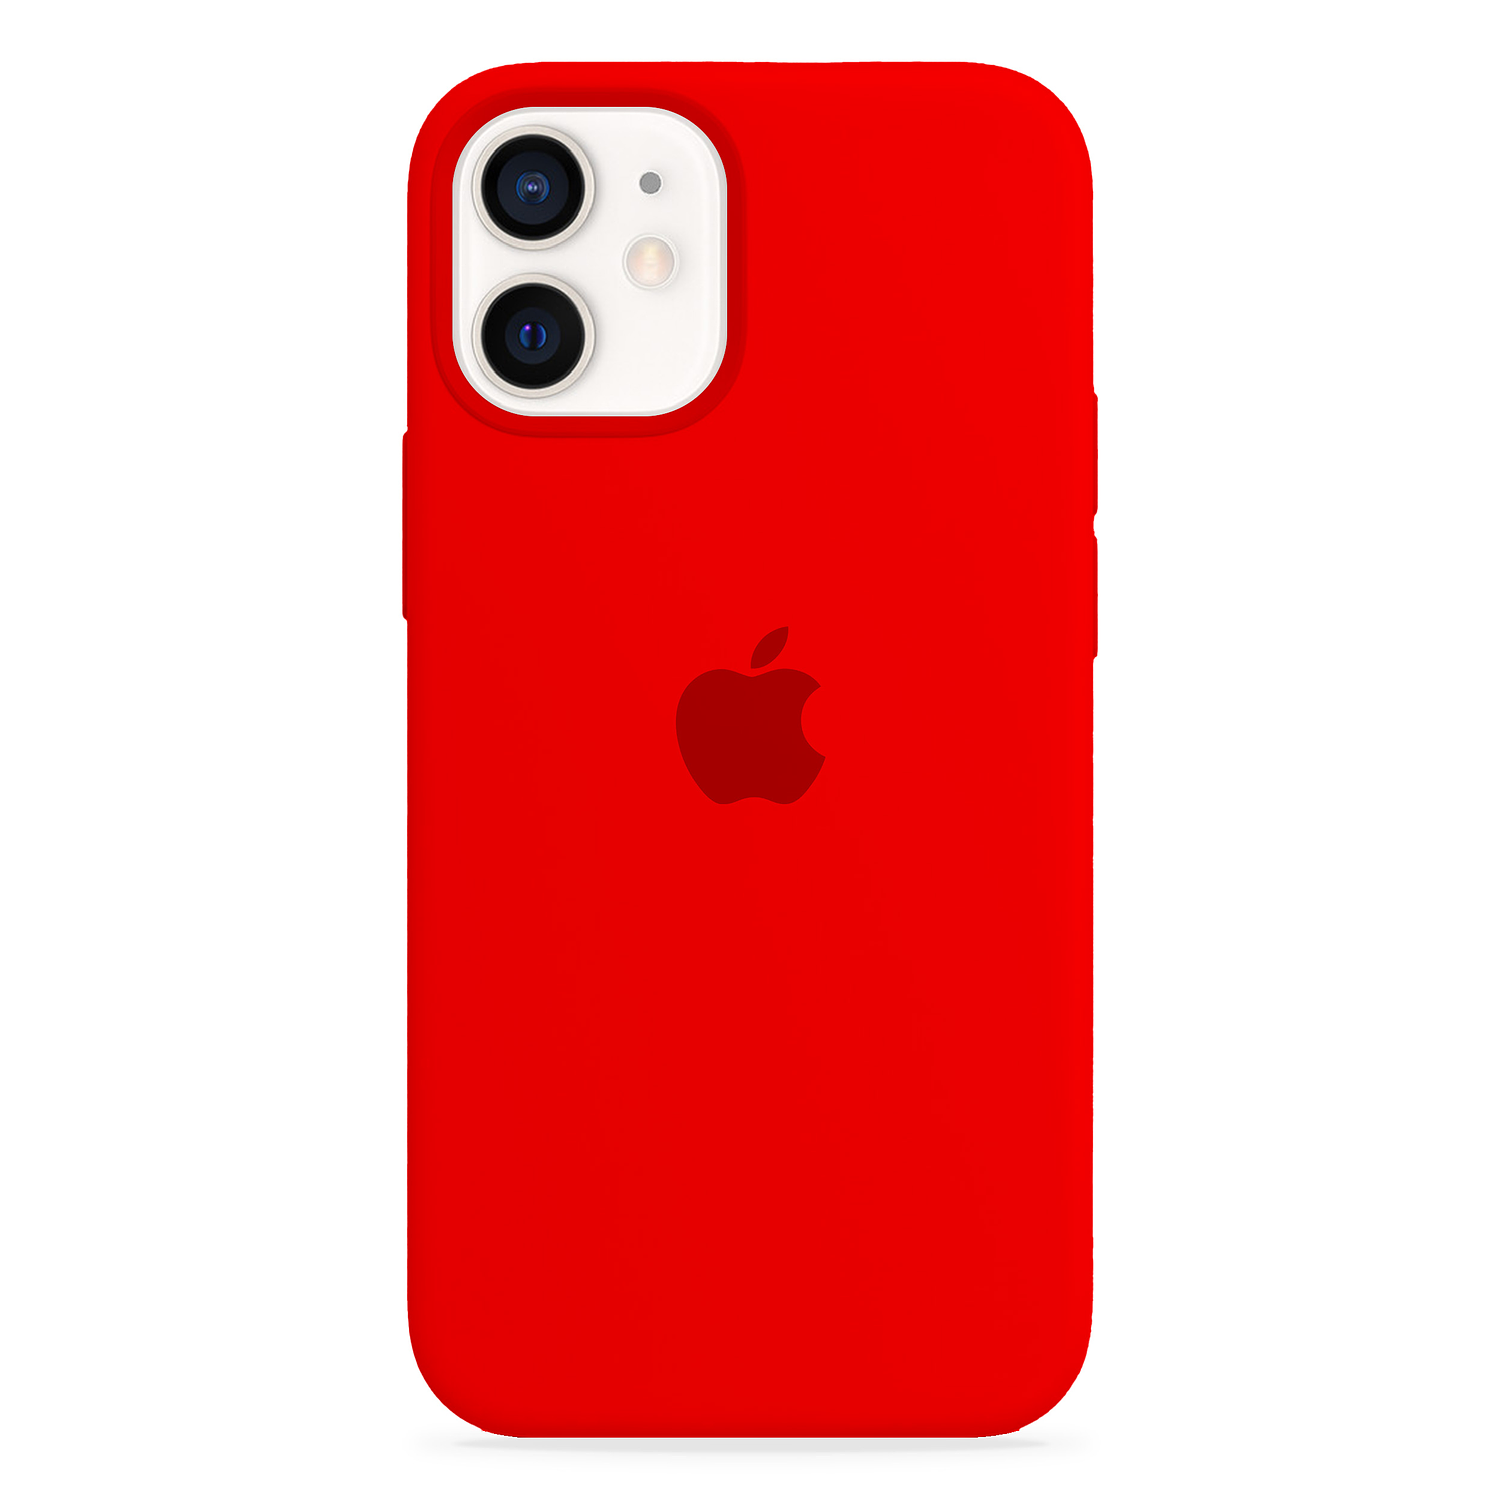 Carcasa de Silicona - iPhone 12 Mini 1